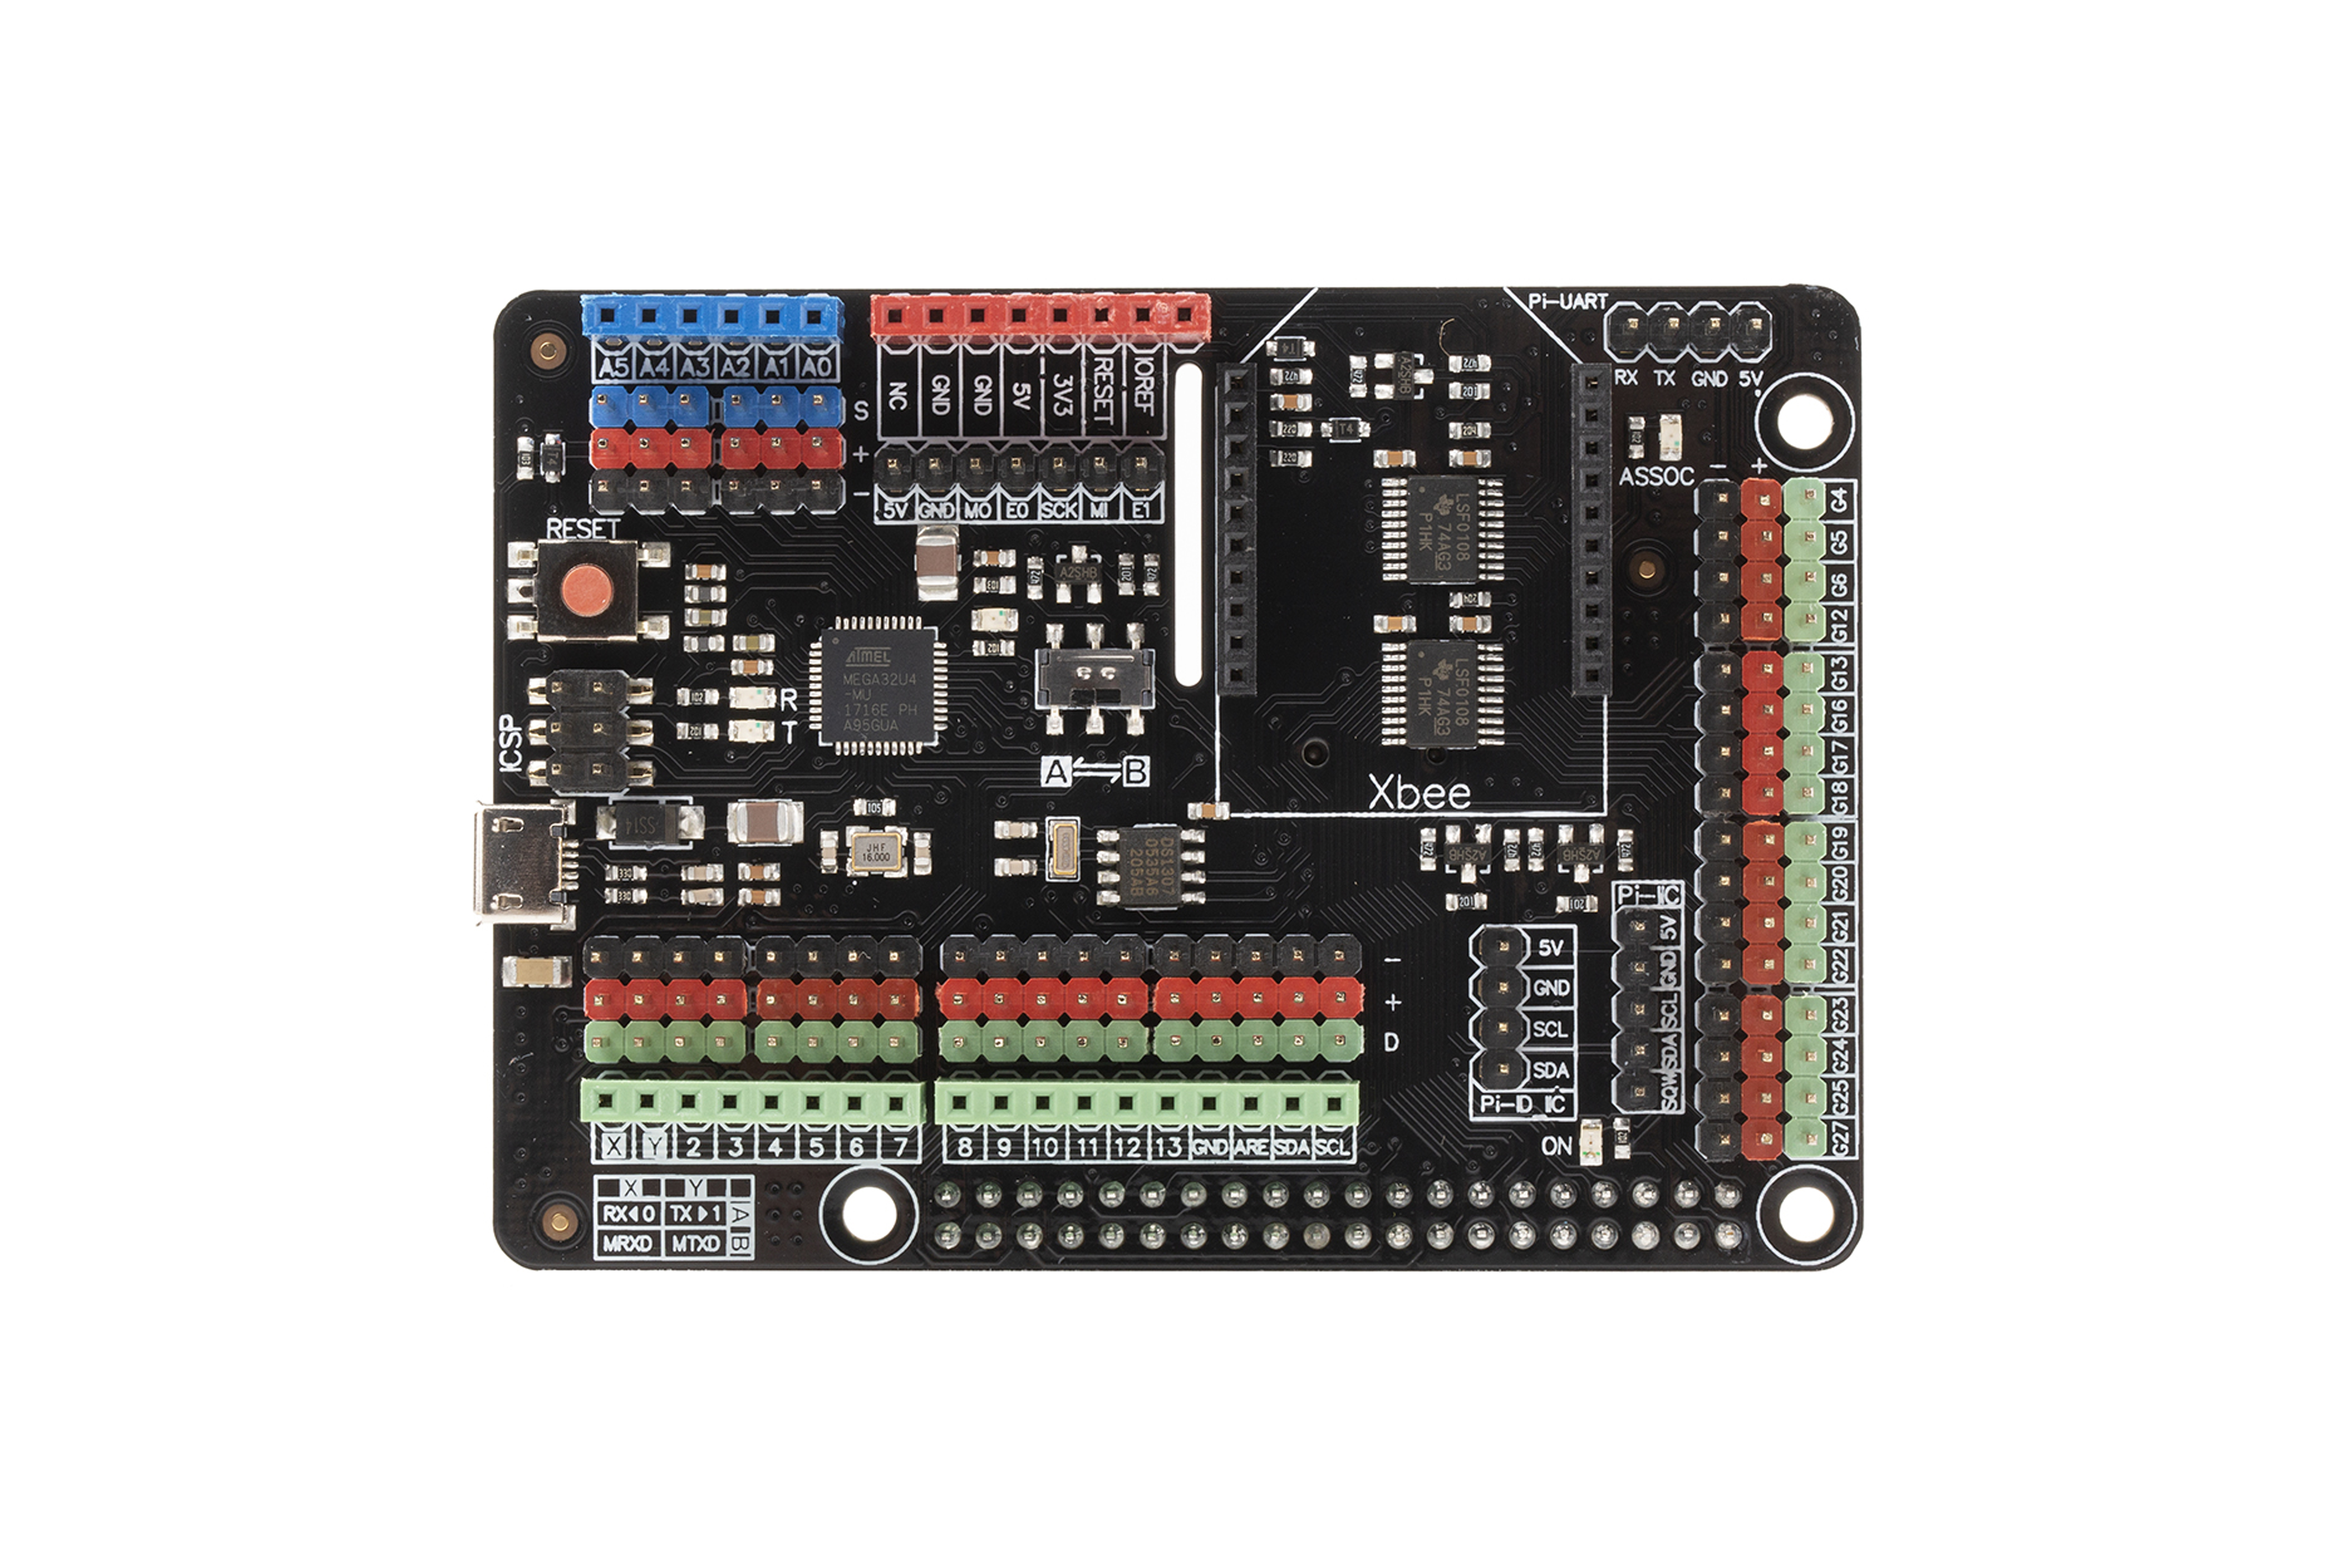 Arduino Shield voor Raspberry Pi B+/2B/3B